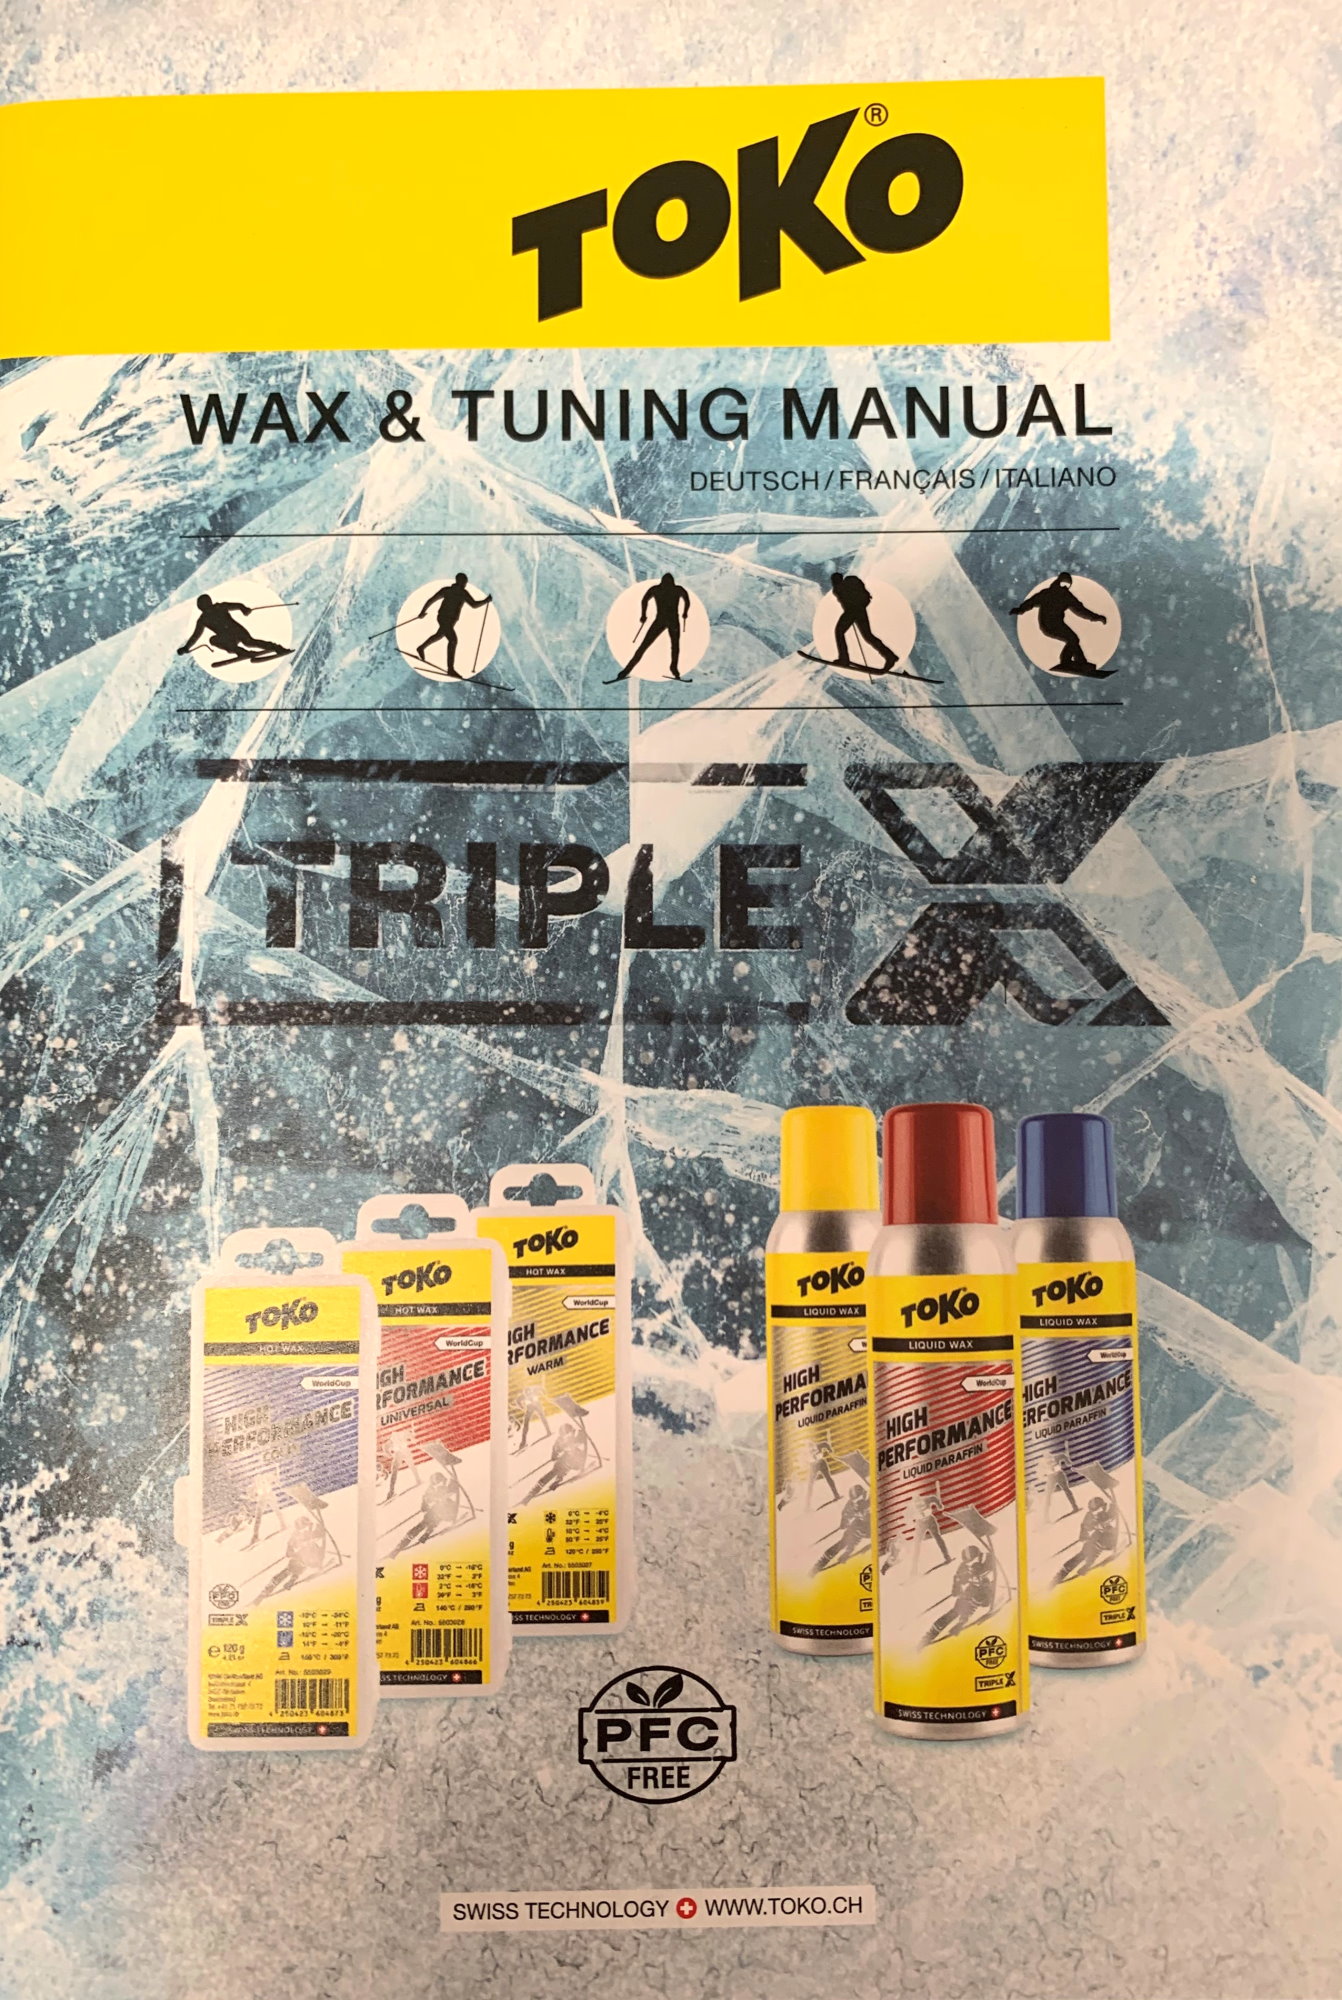 TOKO Wax Manual (Deutsch/Francais/Italiano)